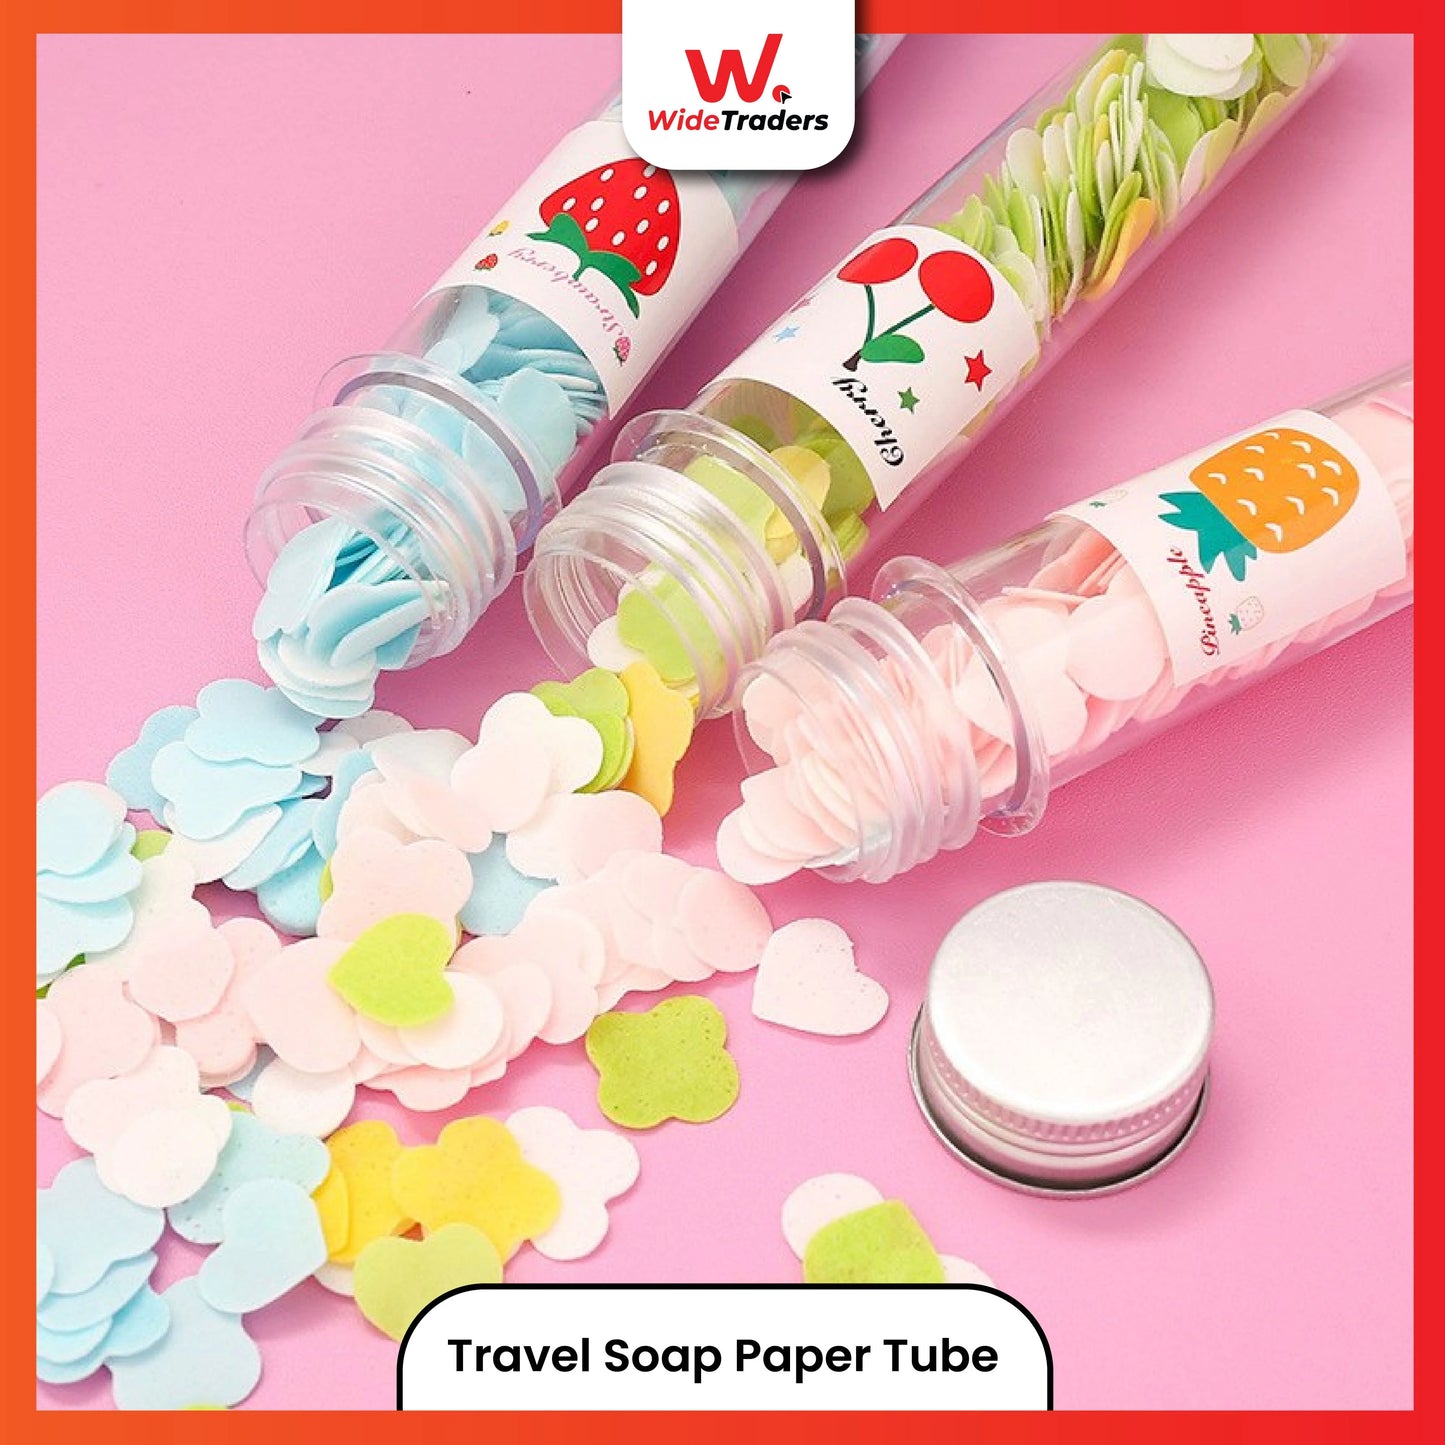 Travel Soap Paper Tube